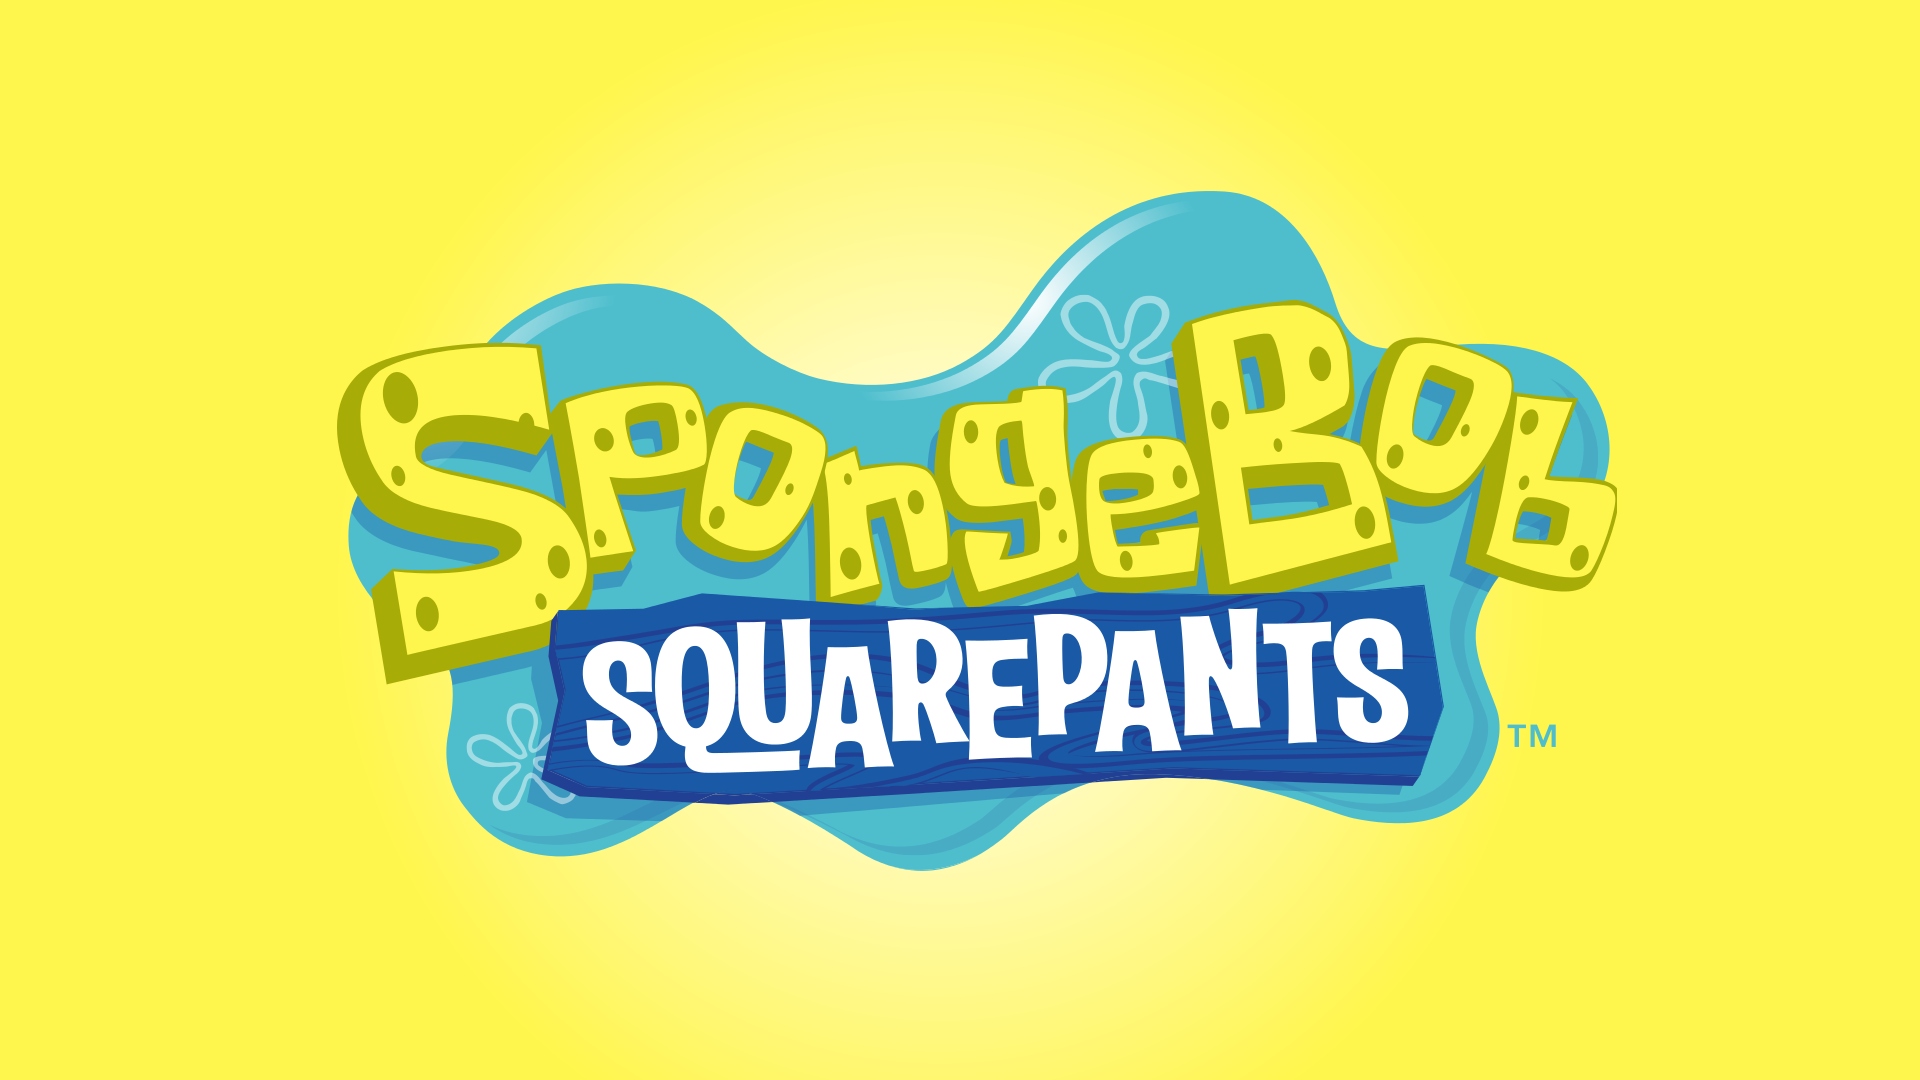 Spongebob Squarepants Wallpaper Pictures Image